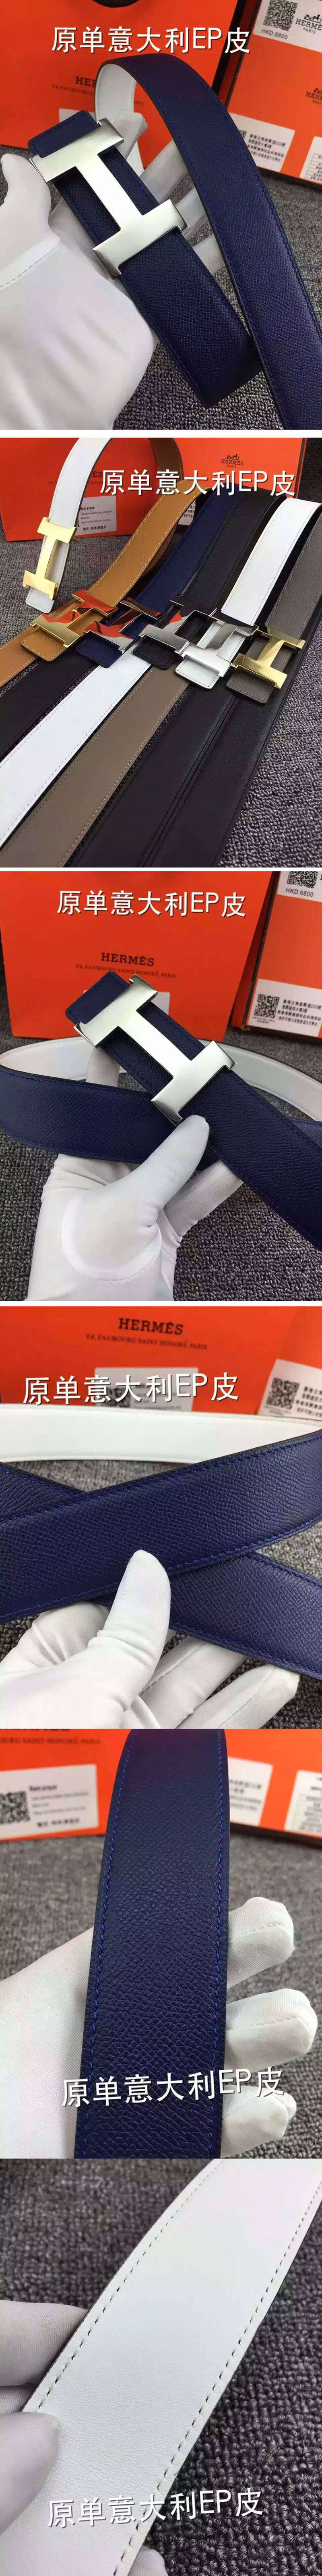 Replica Hermes Belts